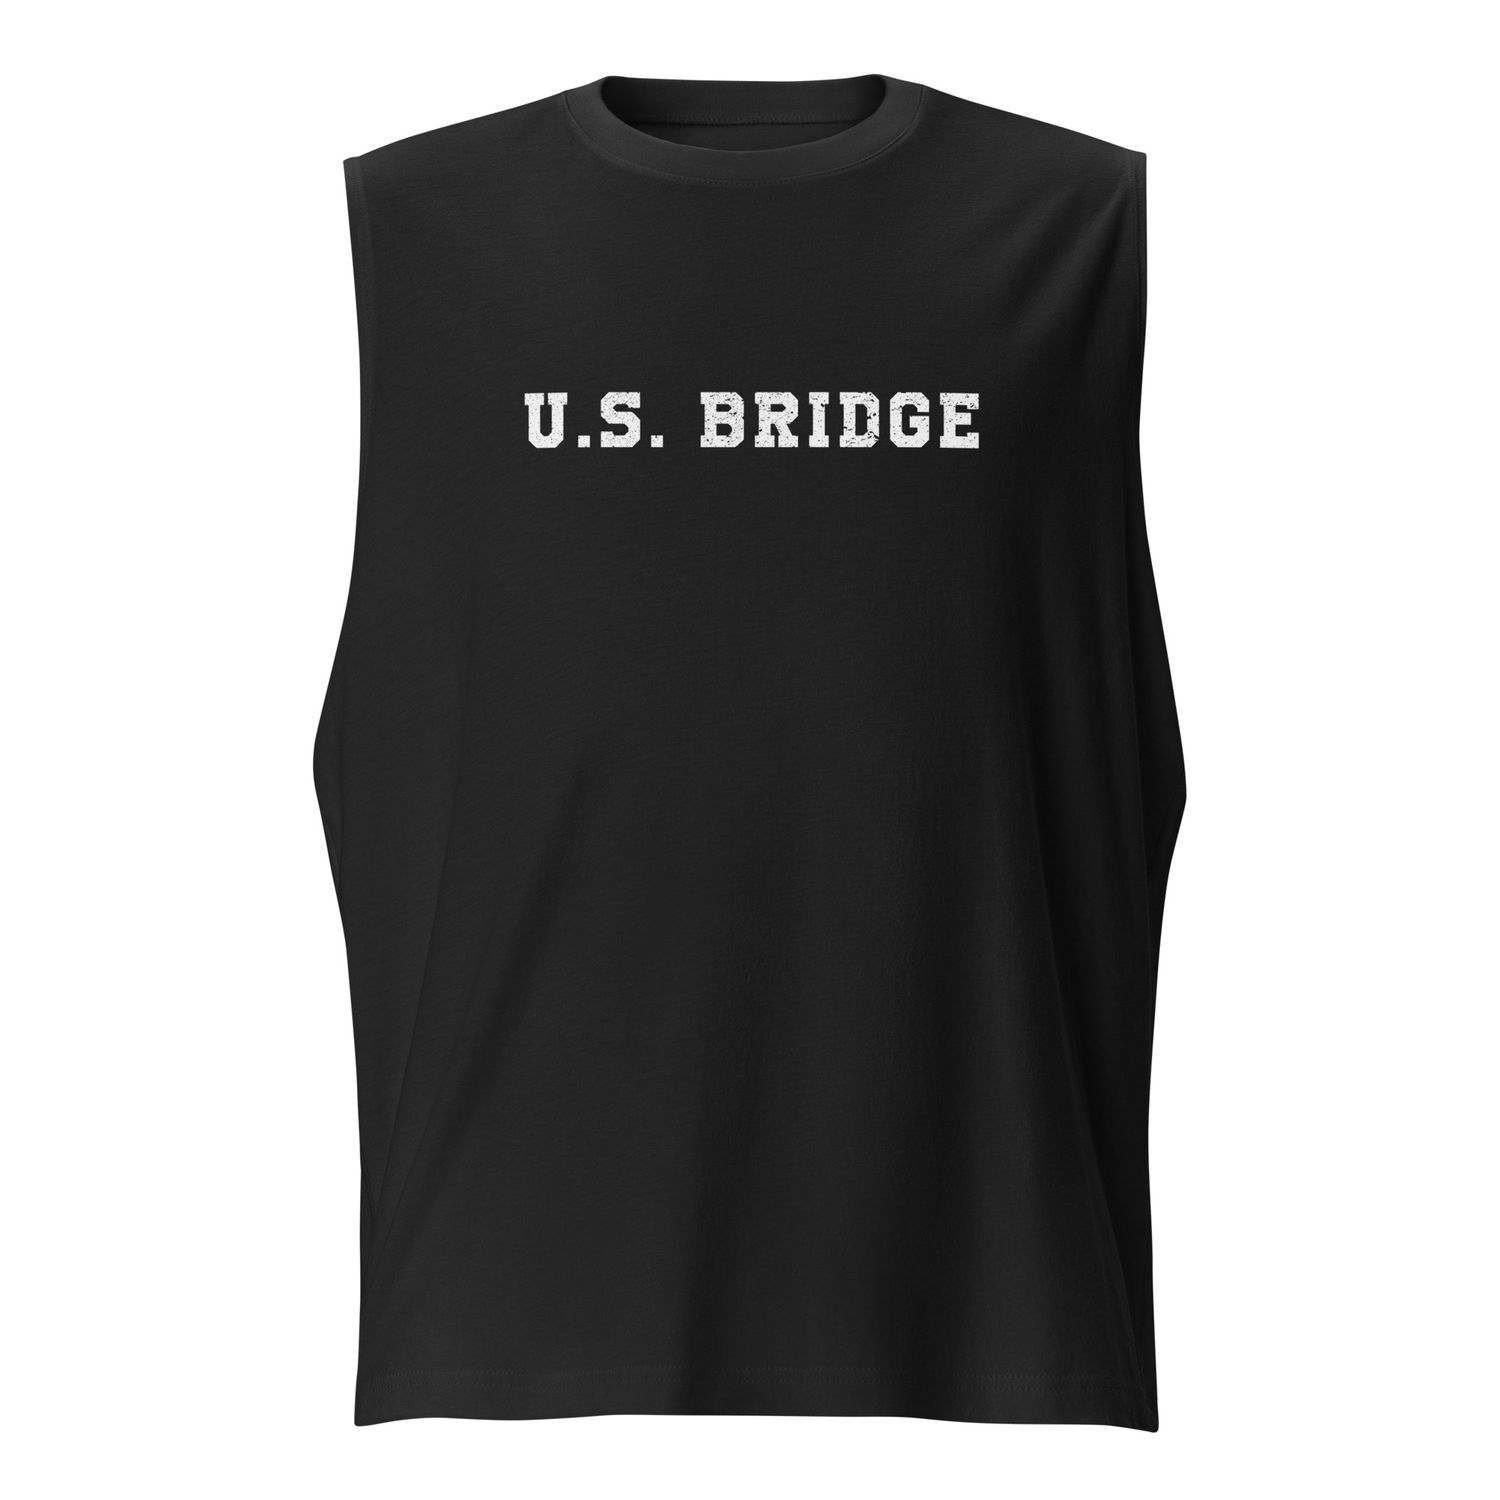 U.S. Bridge Muscle Shirt